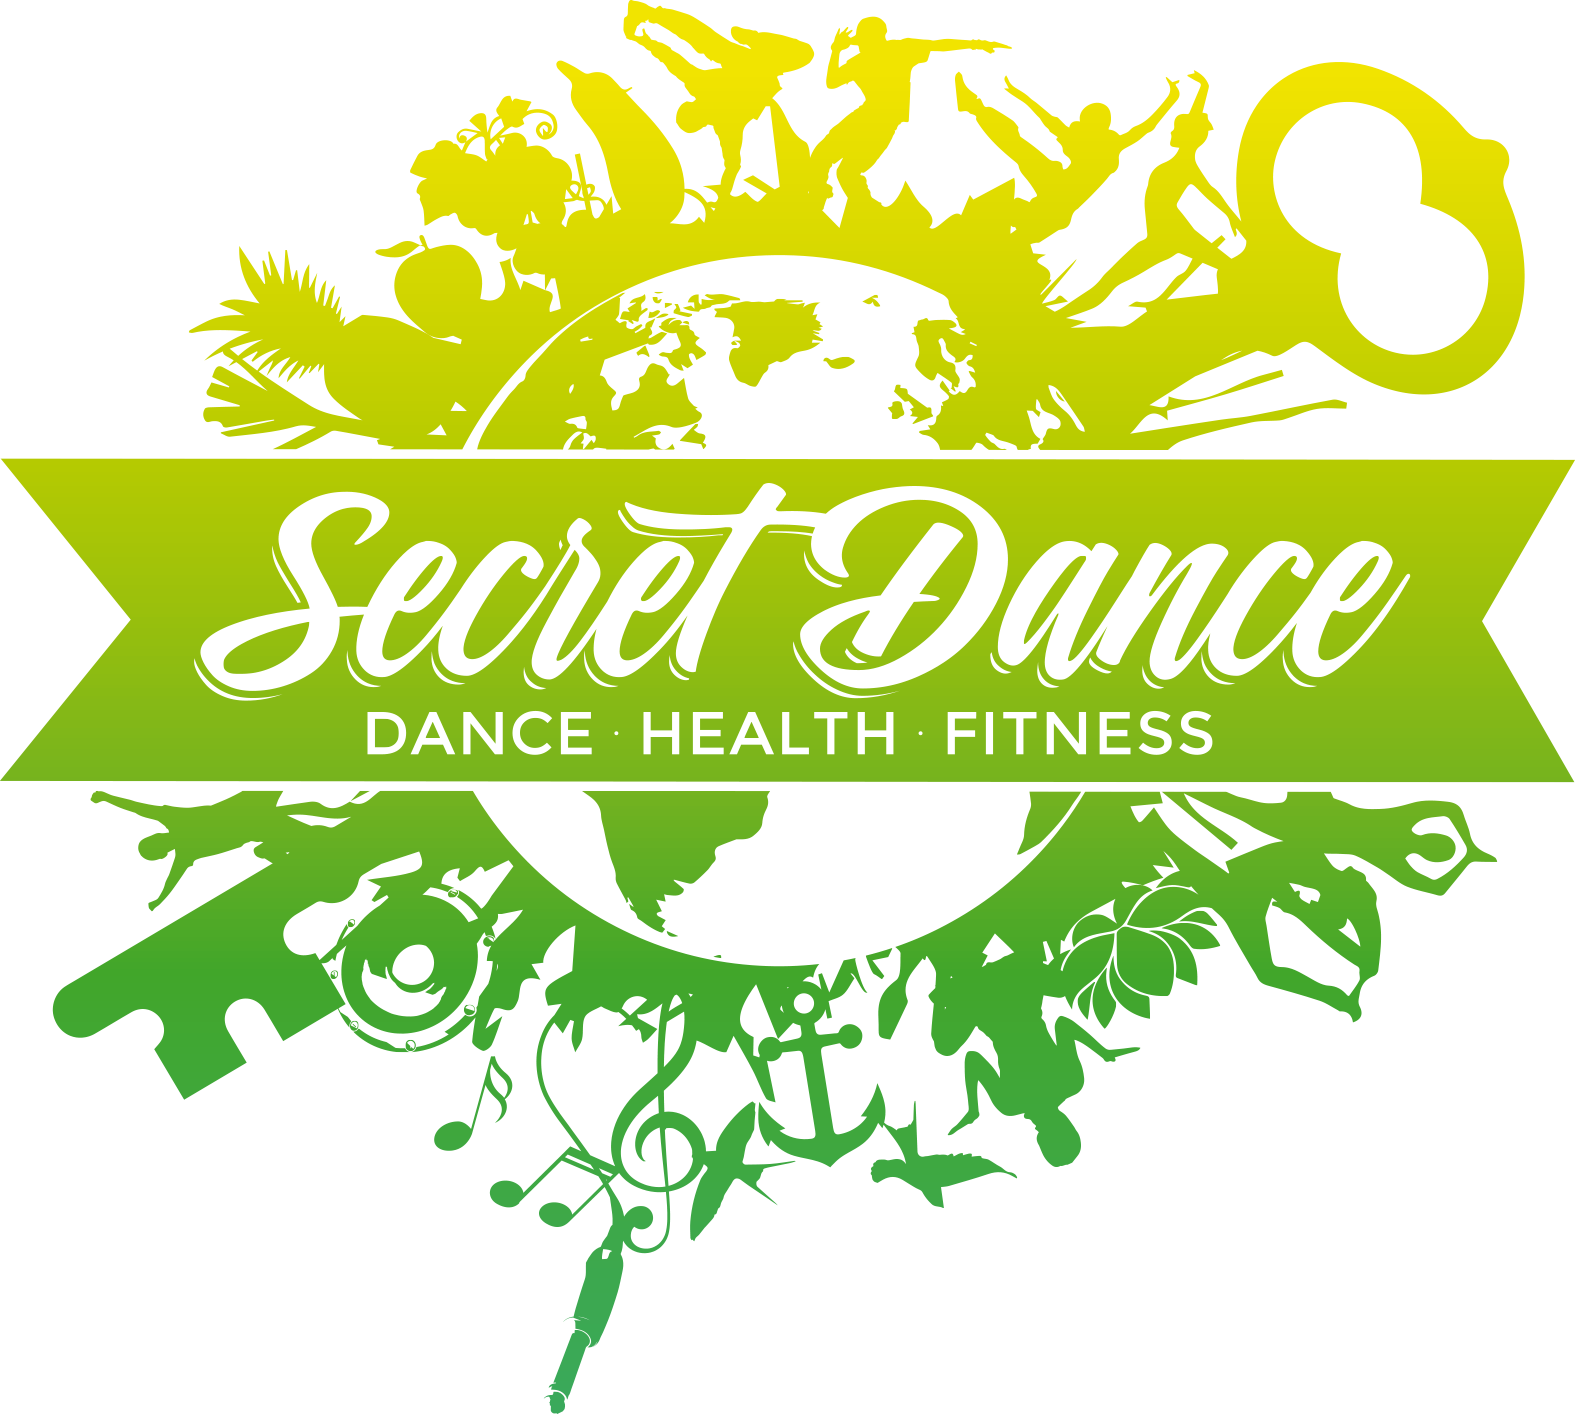 SECRET DANCE